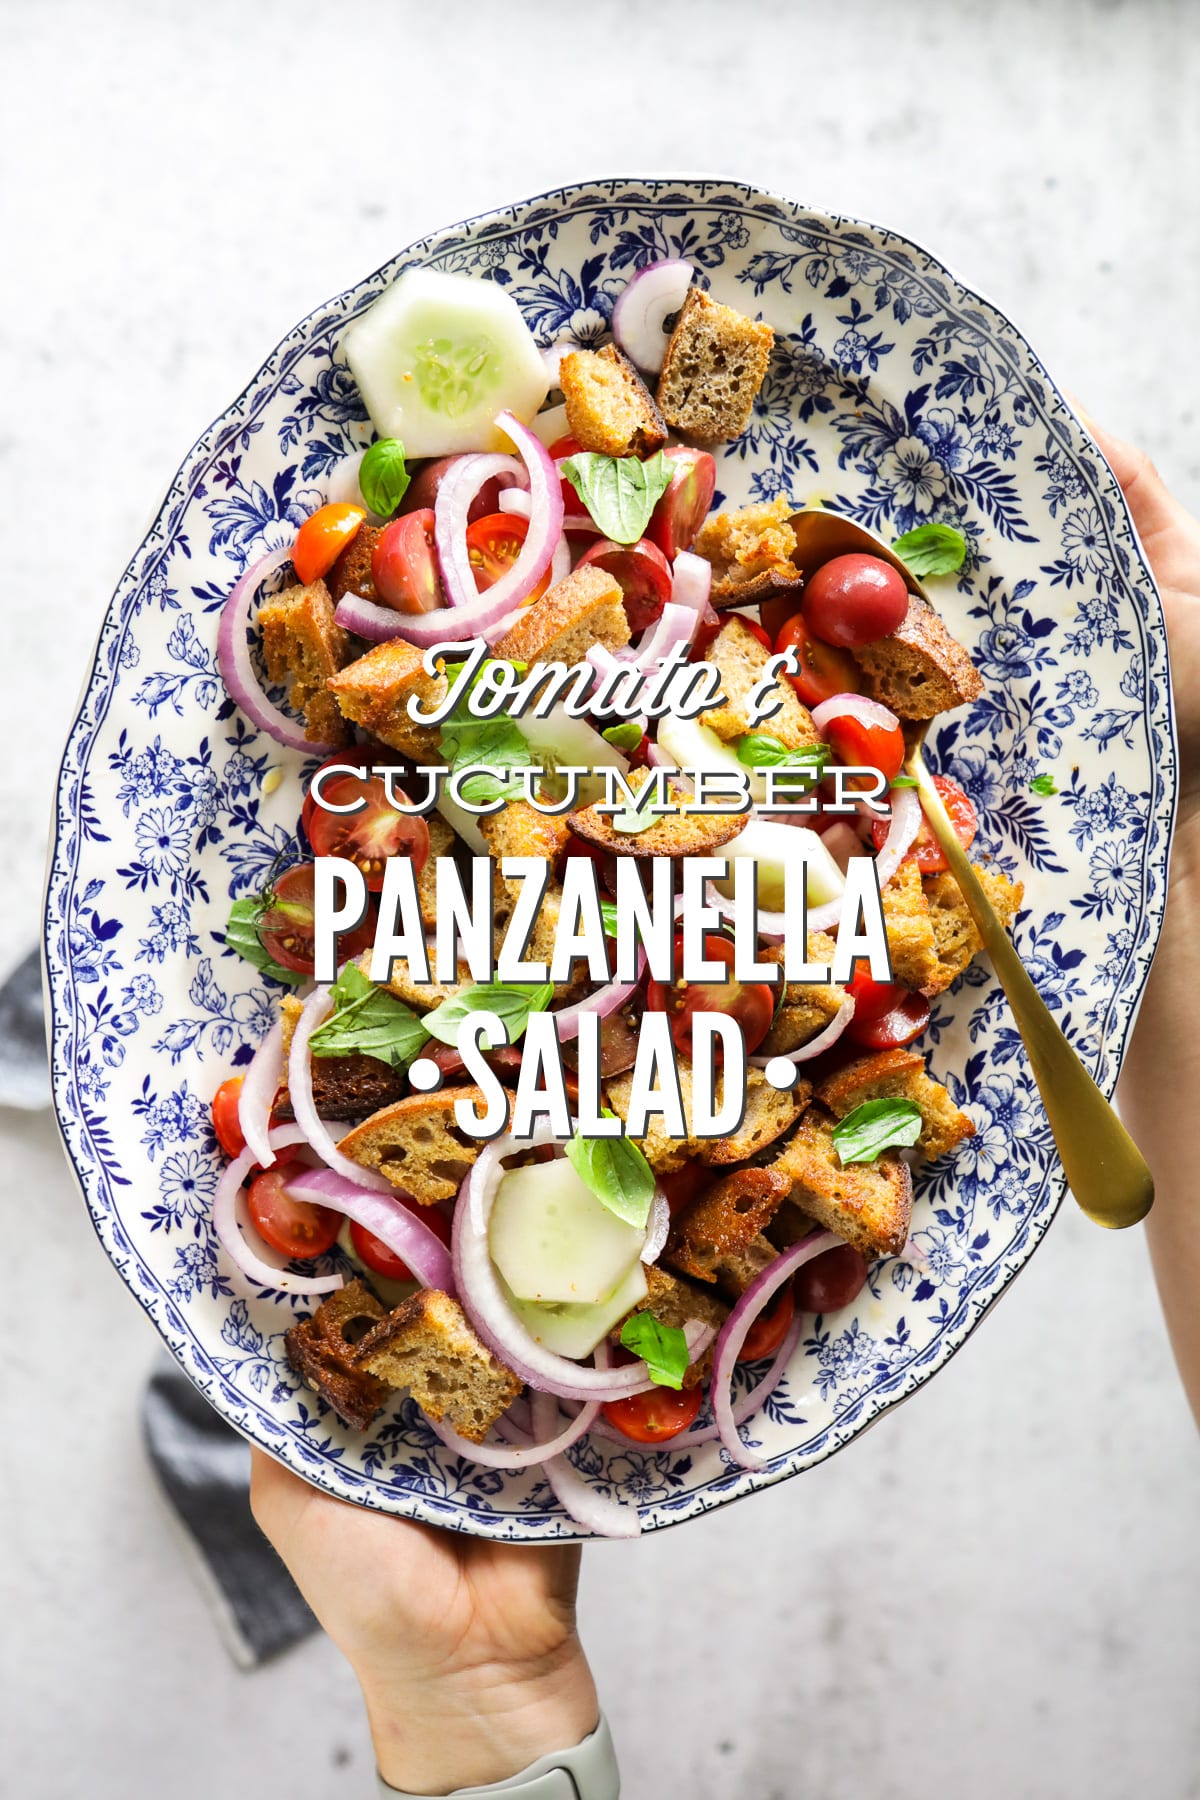 Tomato and Cucumber Panzanella Salad